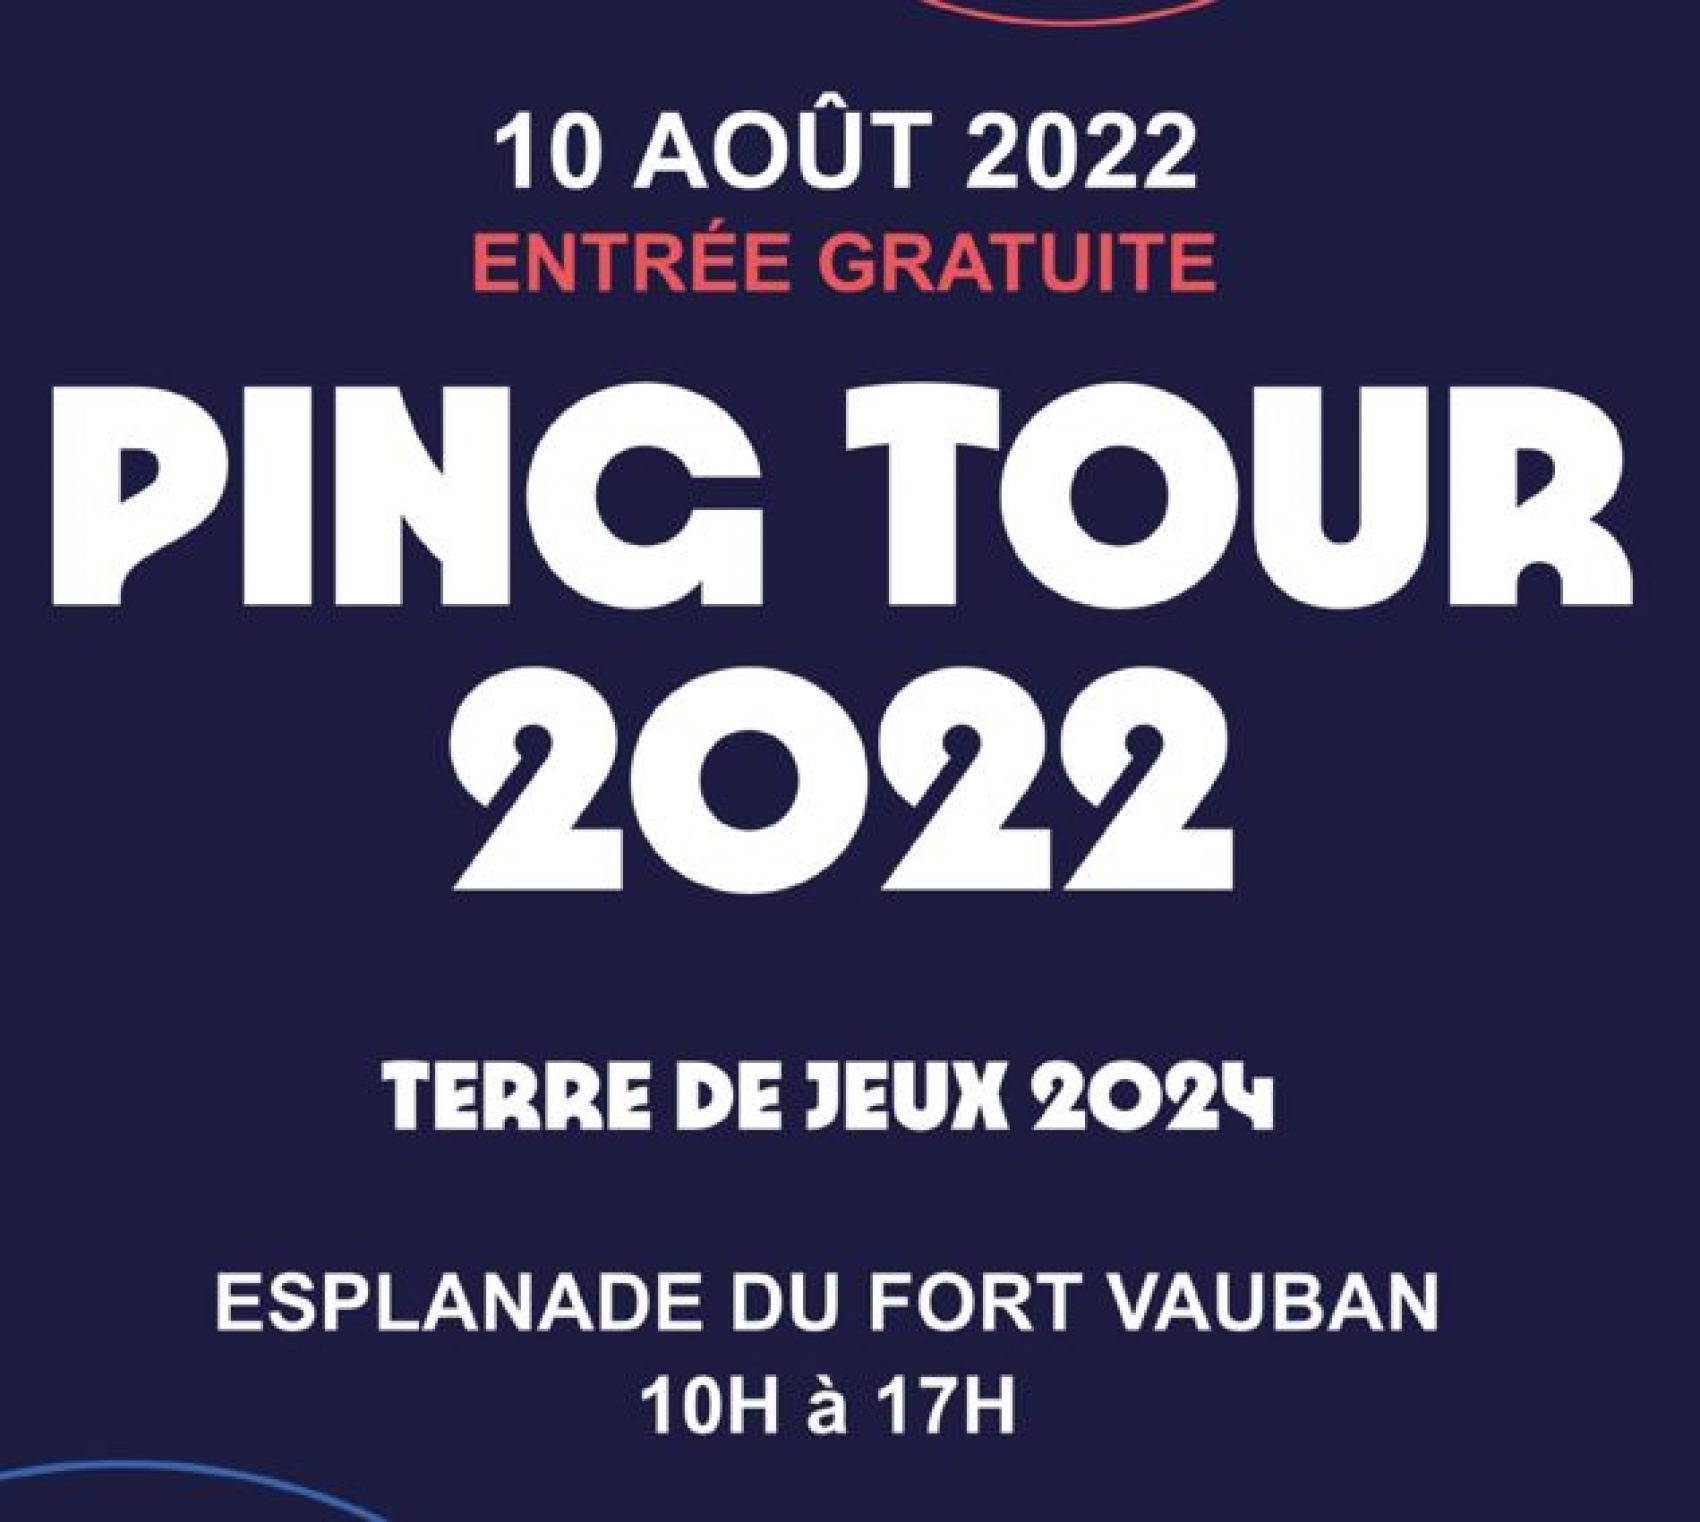 PING TOUR 2022 - MERCREDI 10 AOÛT 2022 - ESPLANADE DU FORT VAUBAN